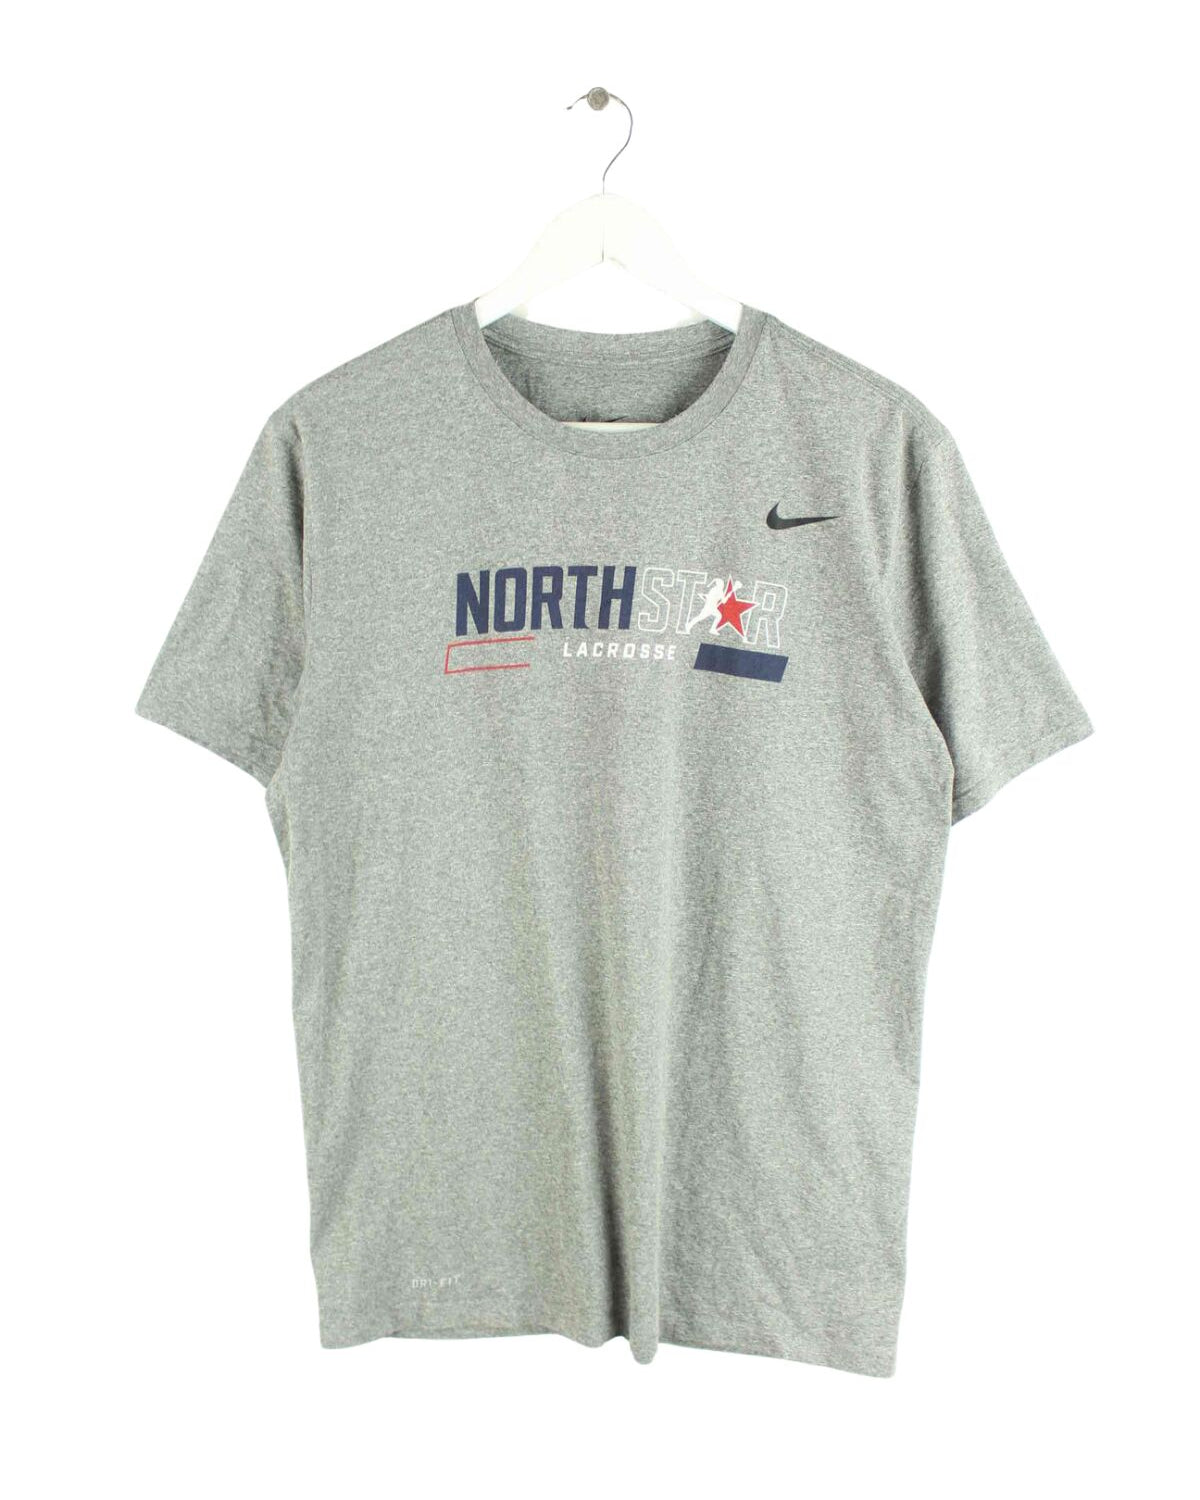 Nike Lacrosse North Star Sport T-Shirt Grau L (front image)